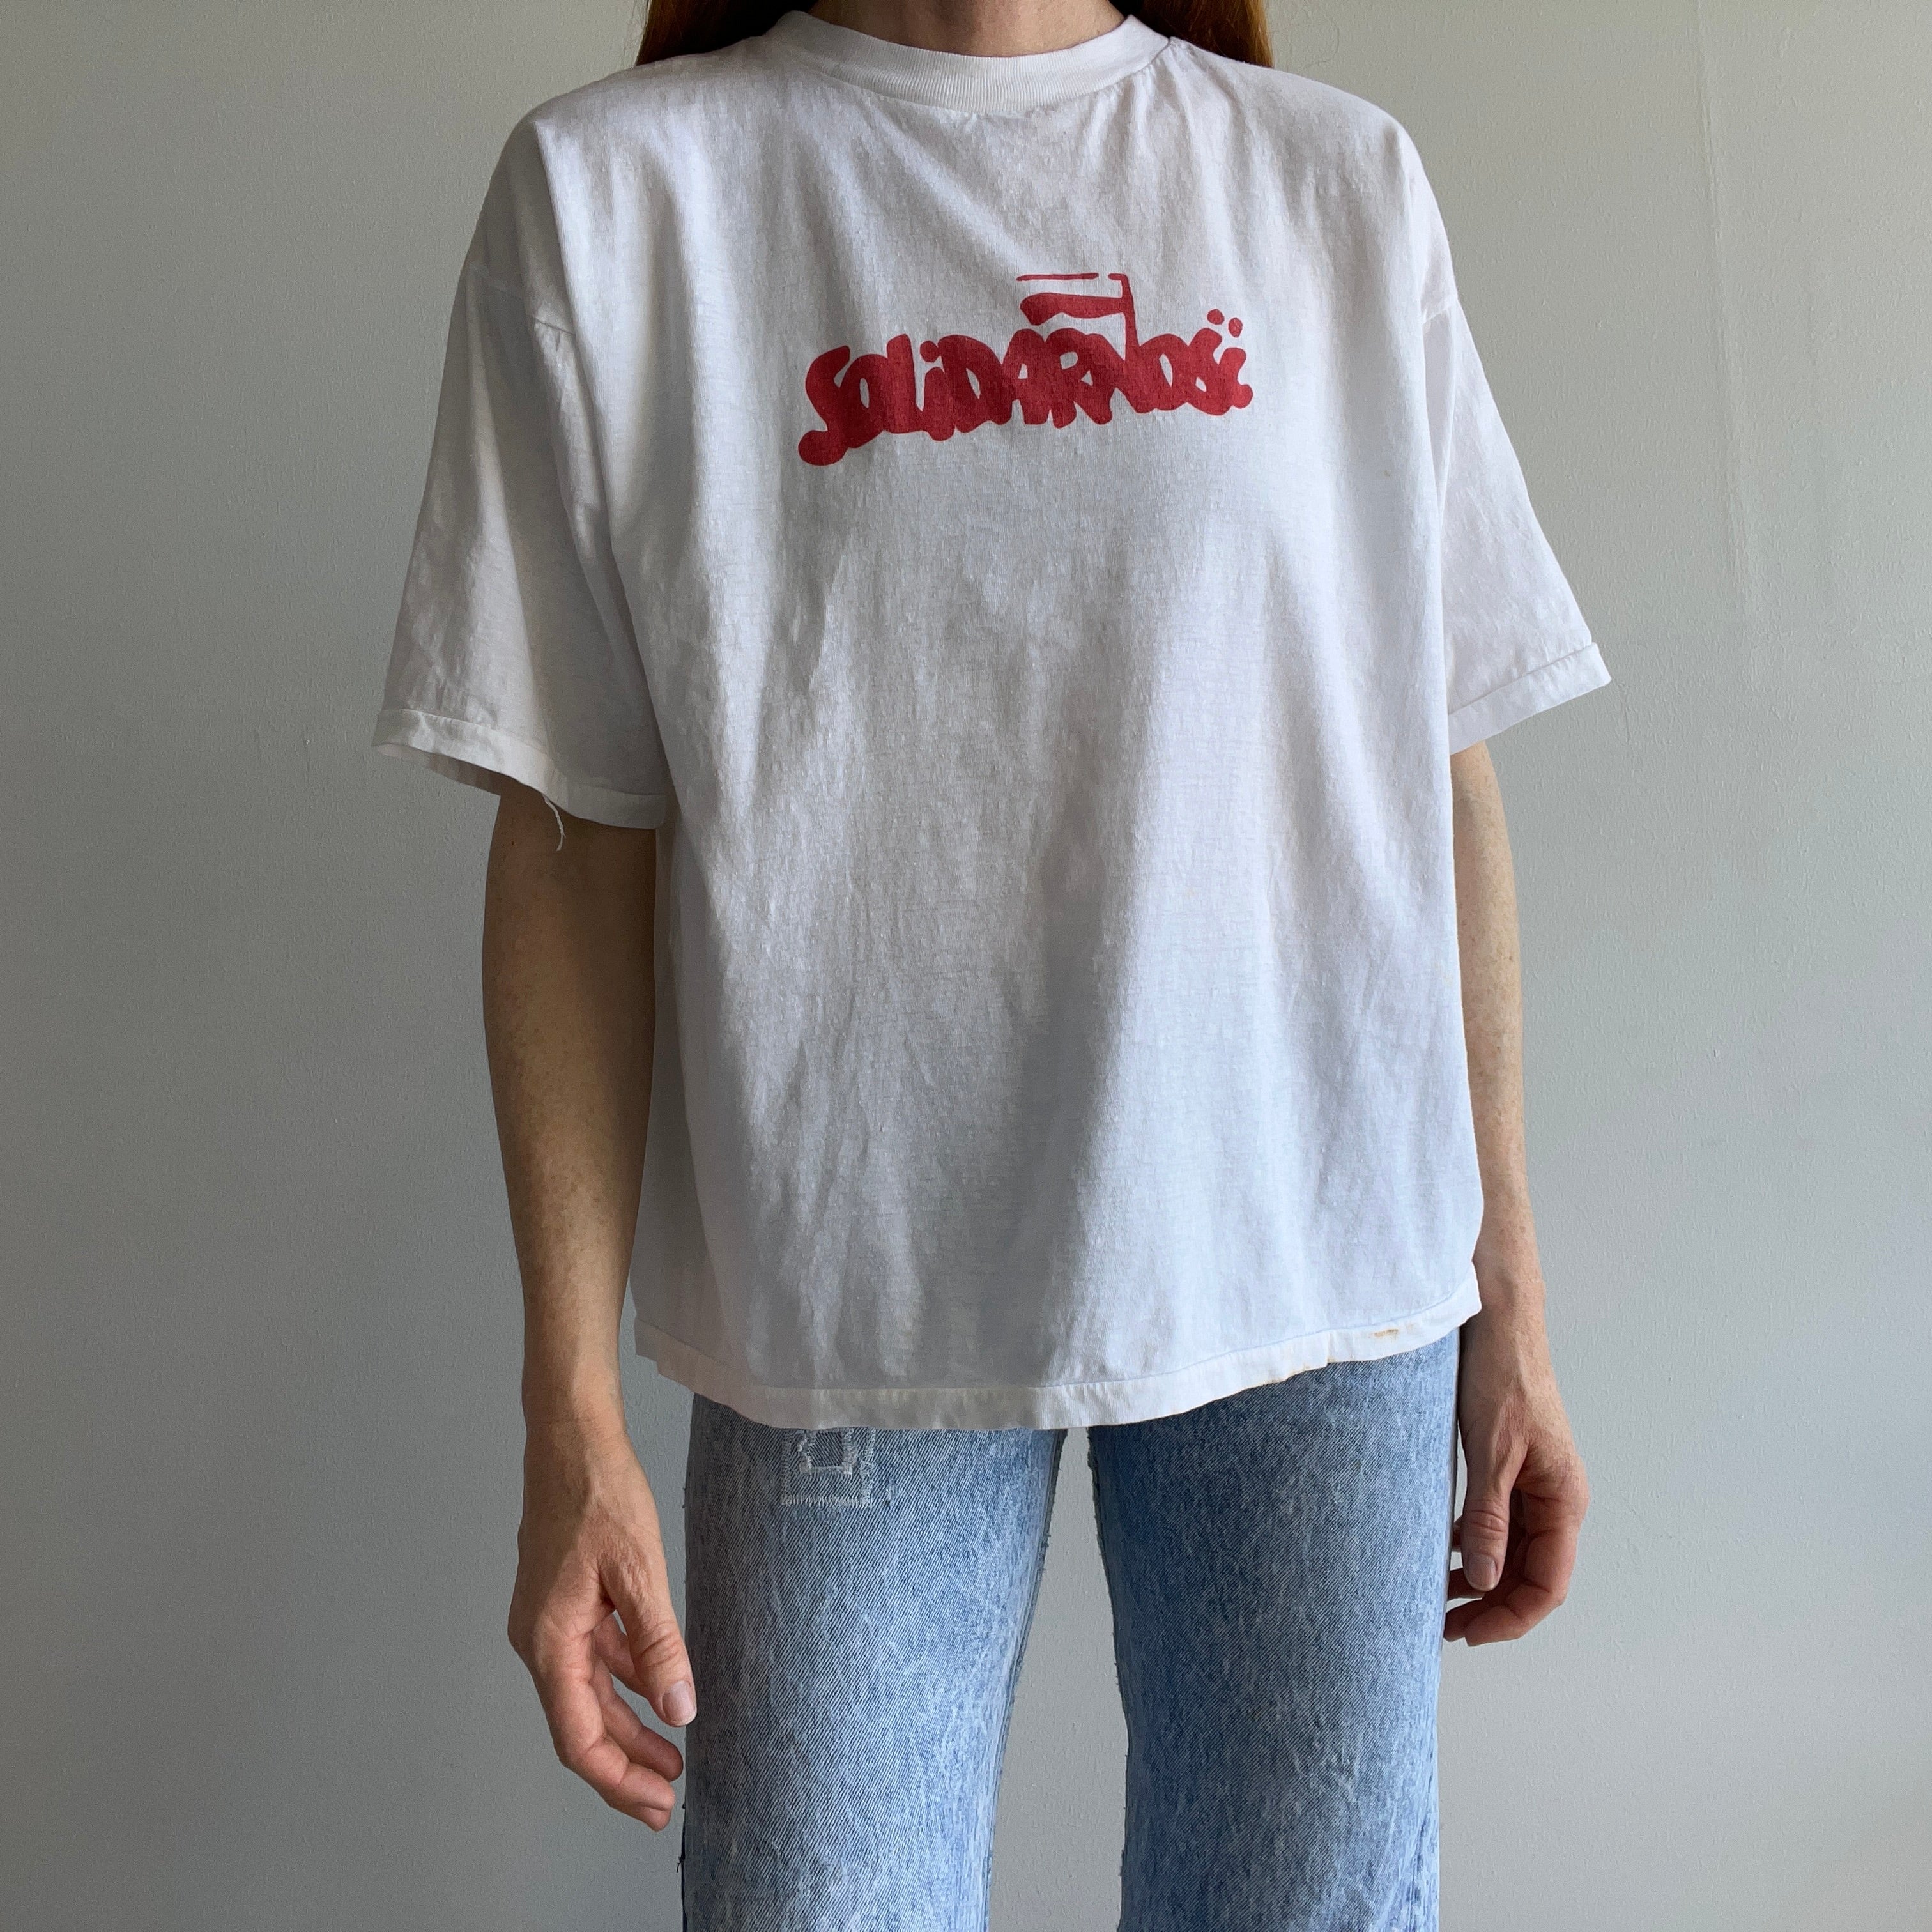 1980s Solidarnosci - A Self Governing Polish Trade Union - Cotton T-Shirt